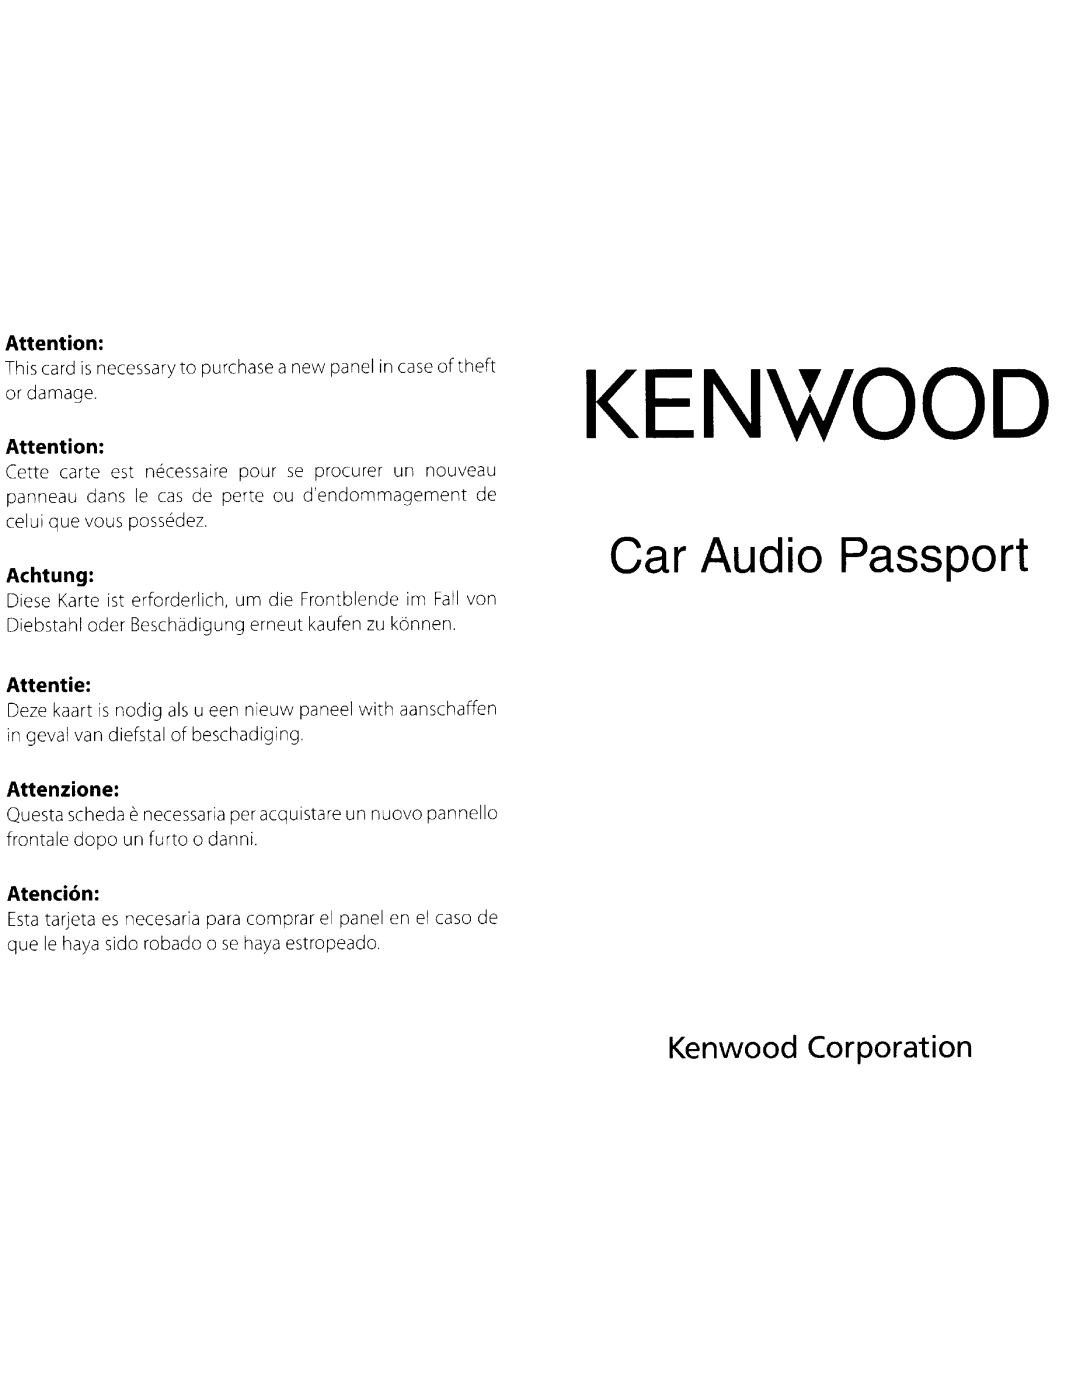 Kenwood KDC-MP438U, KDC-MP338, KDC-MP408U Kenwood Corporation, Car Audio Passport, Achtung, Attentie, Attenzione, Atencion 